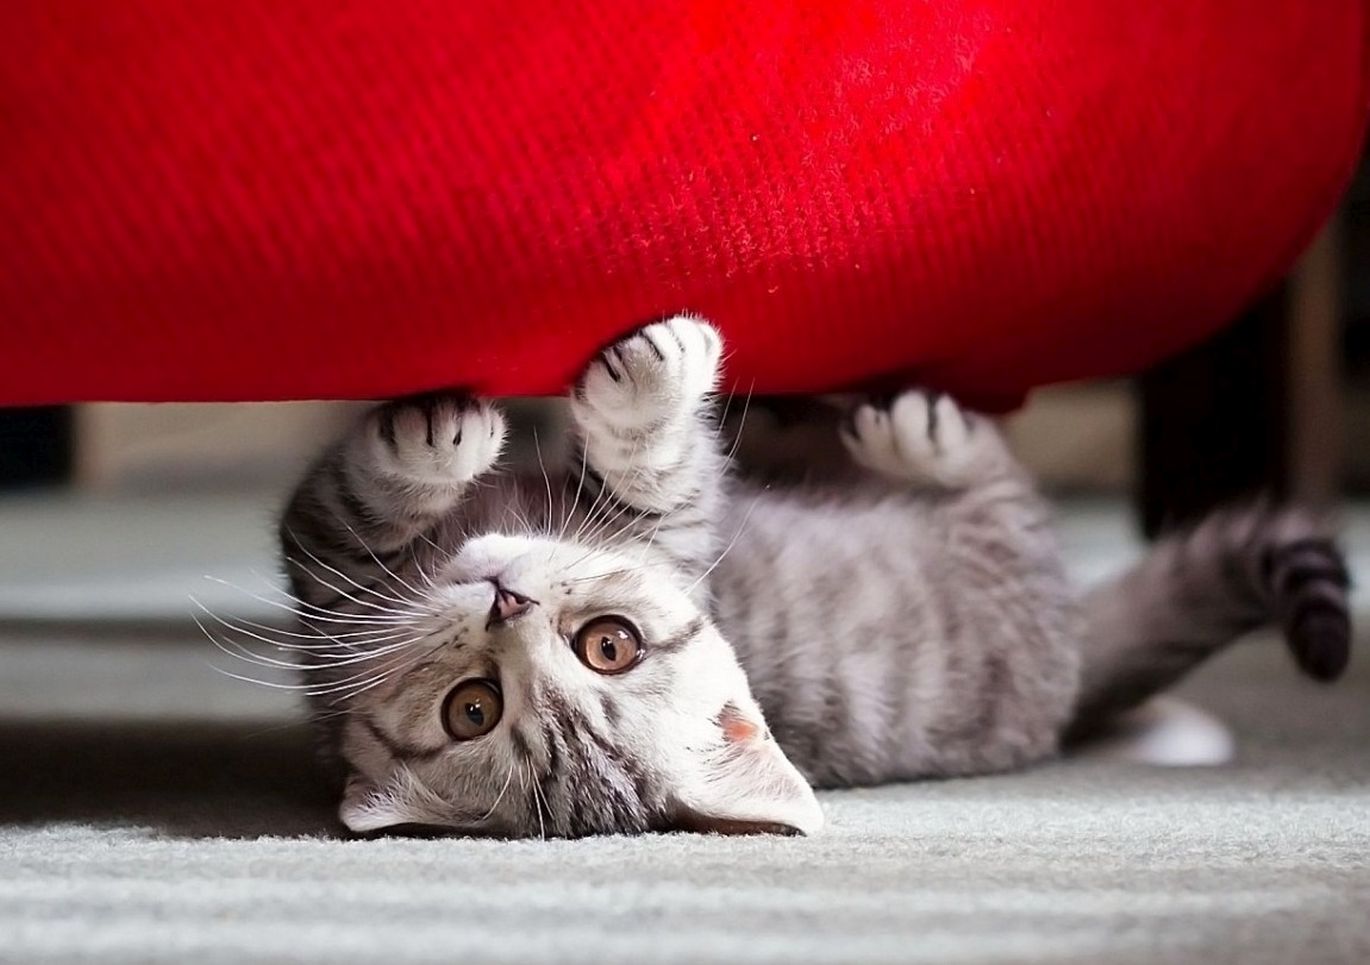 Po lova žaidžiantis kačiukas